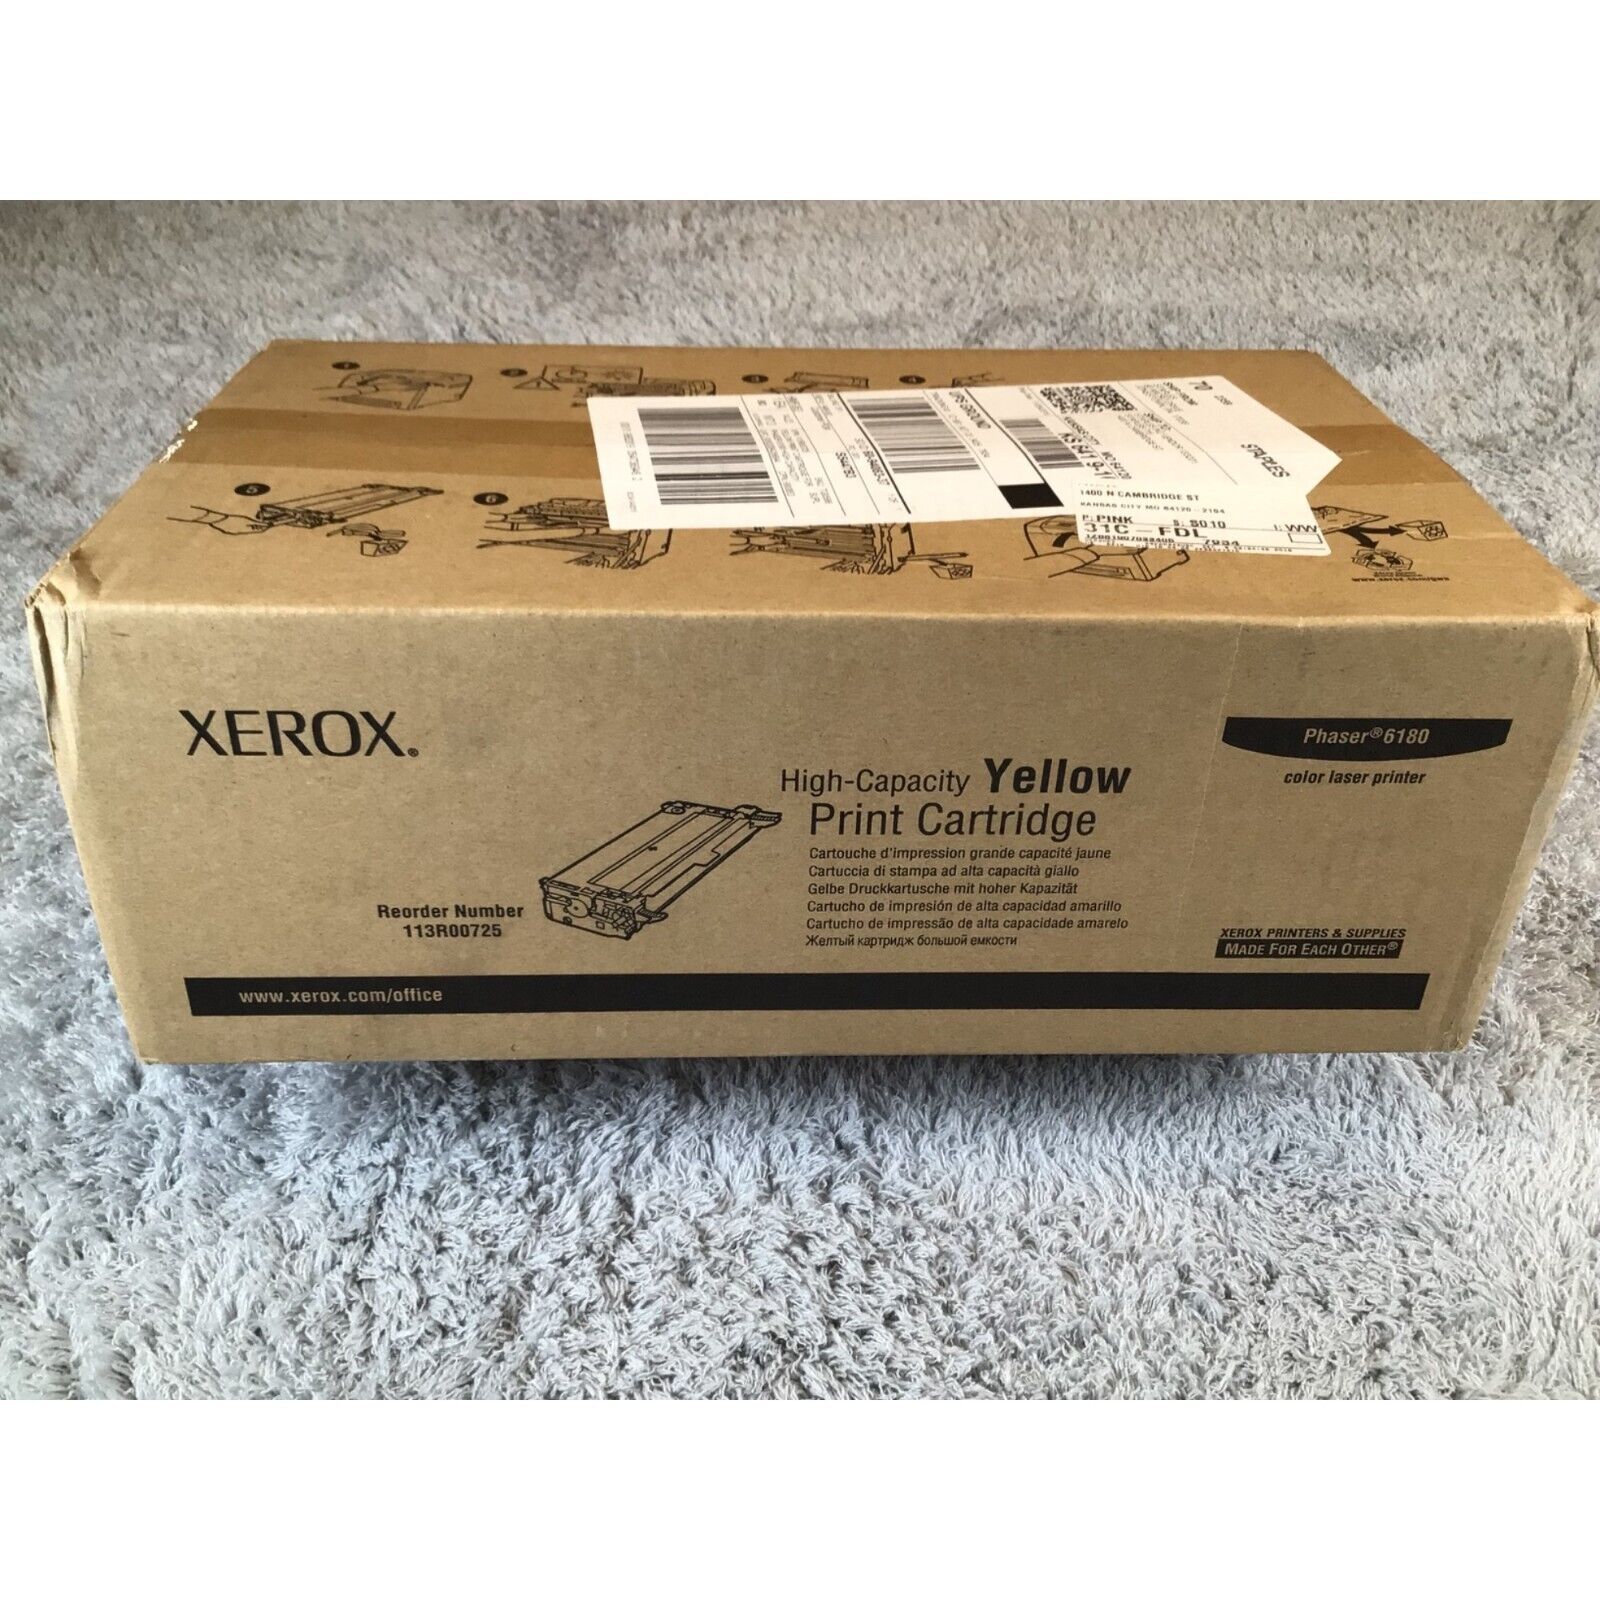 Xerox Phaser 6180 High-Capacity Yellow Print Cartridge - Reorder Number 113R0072